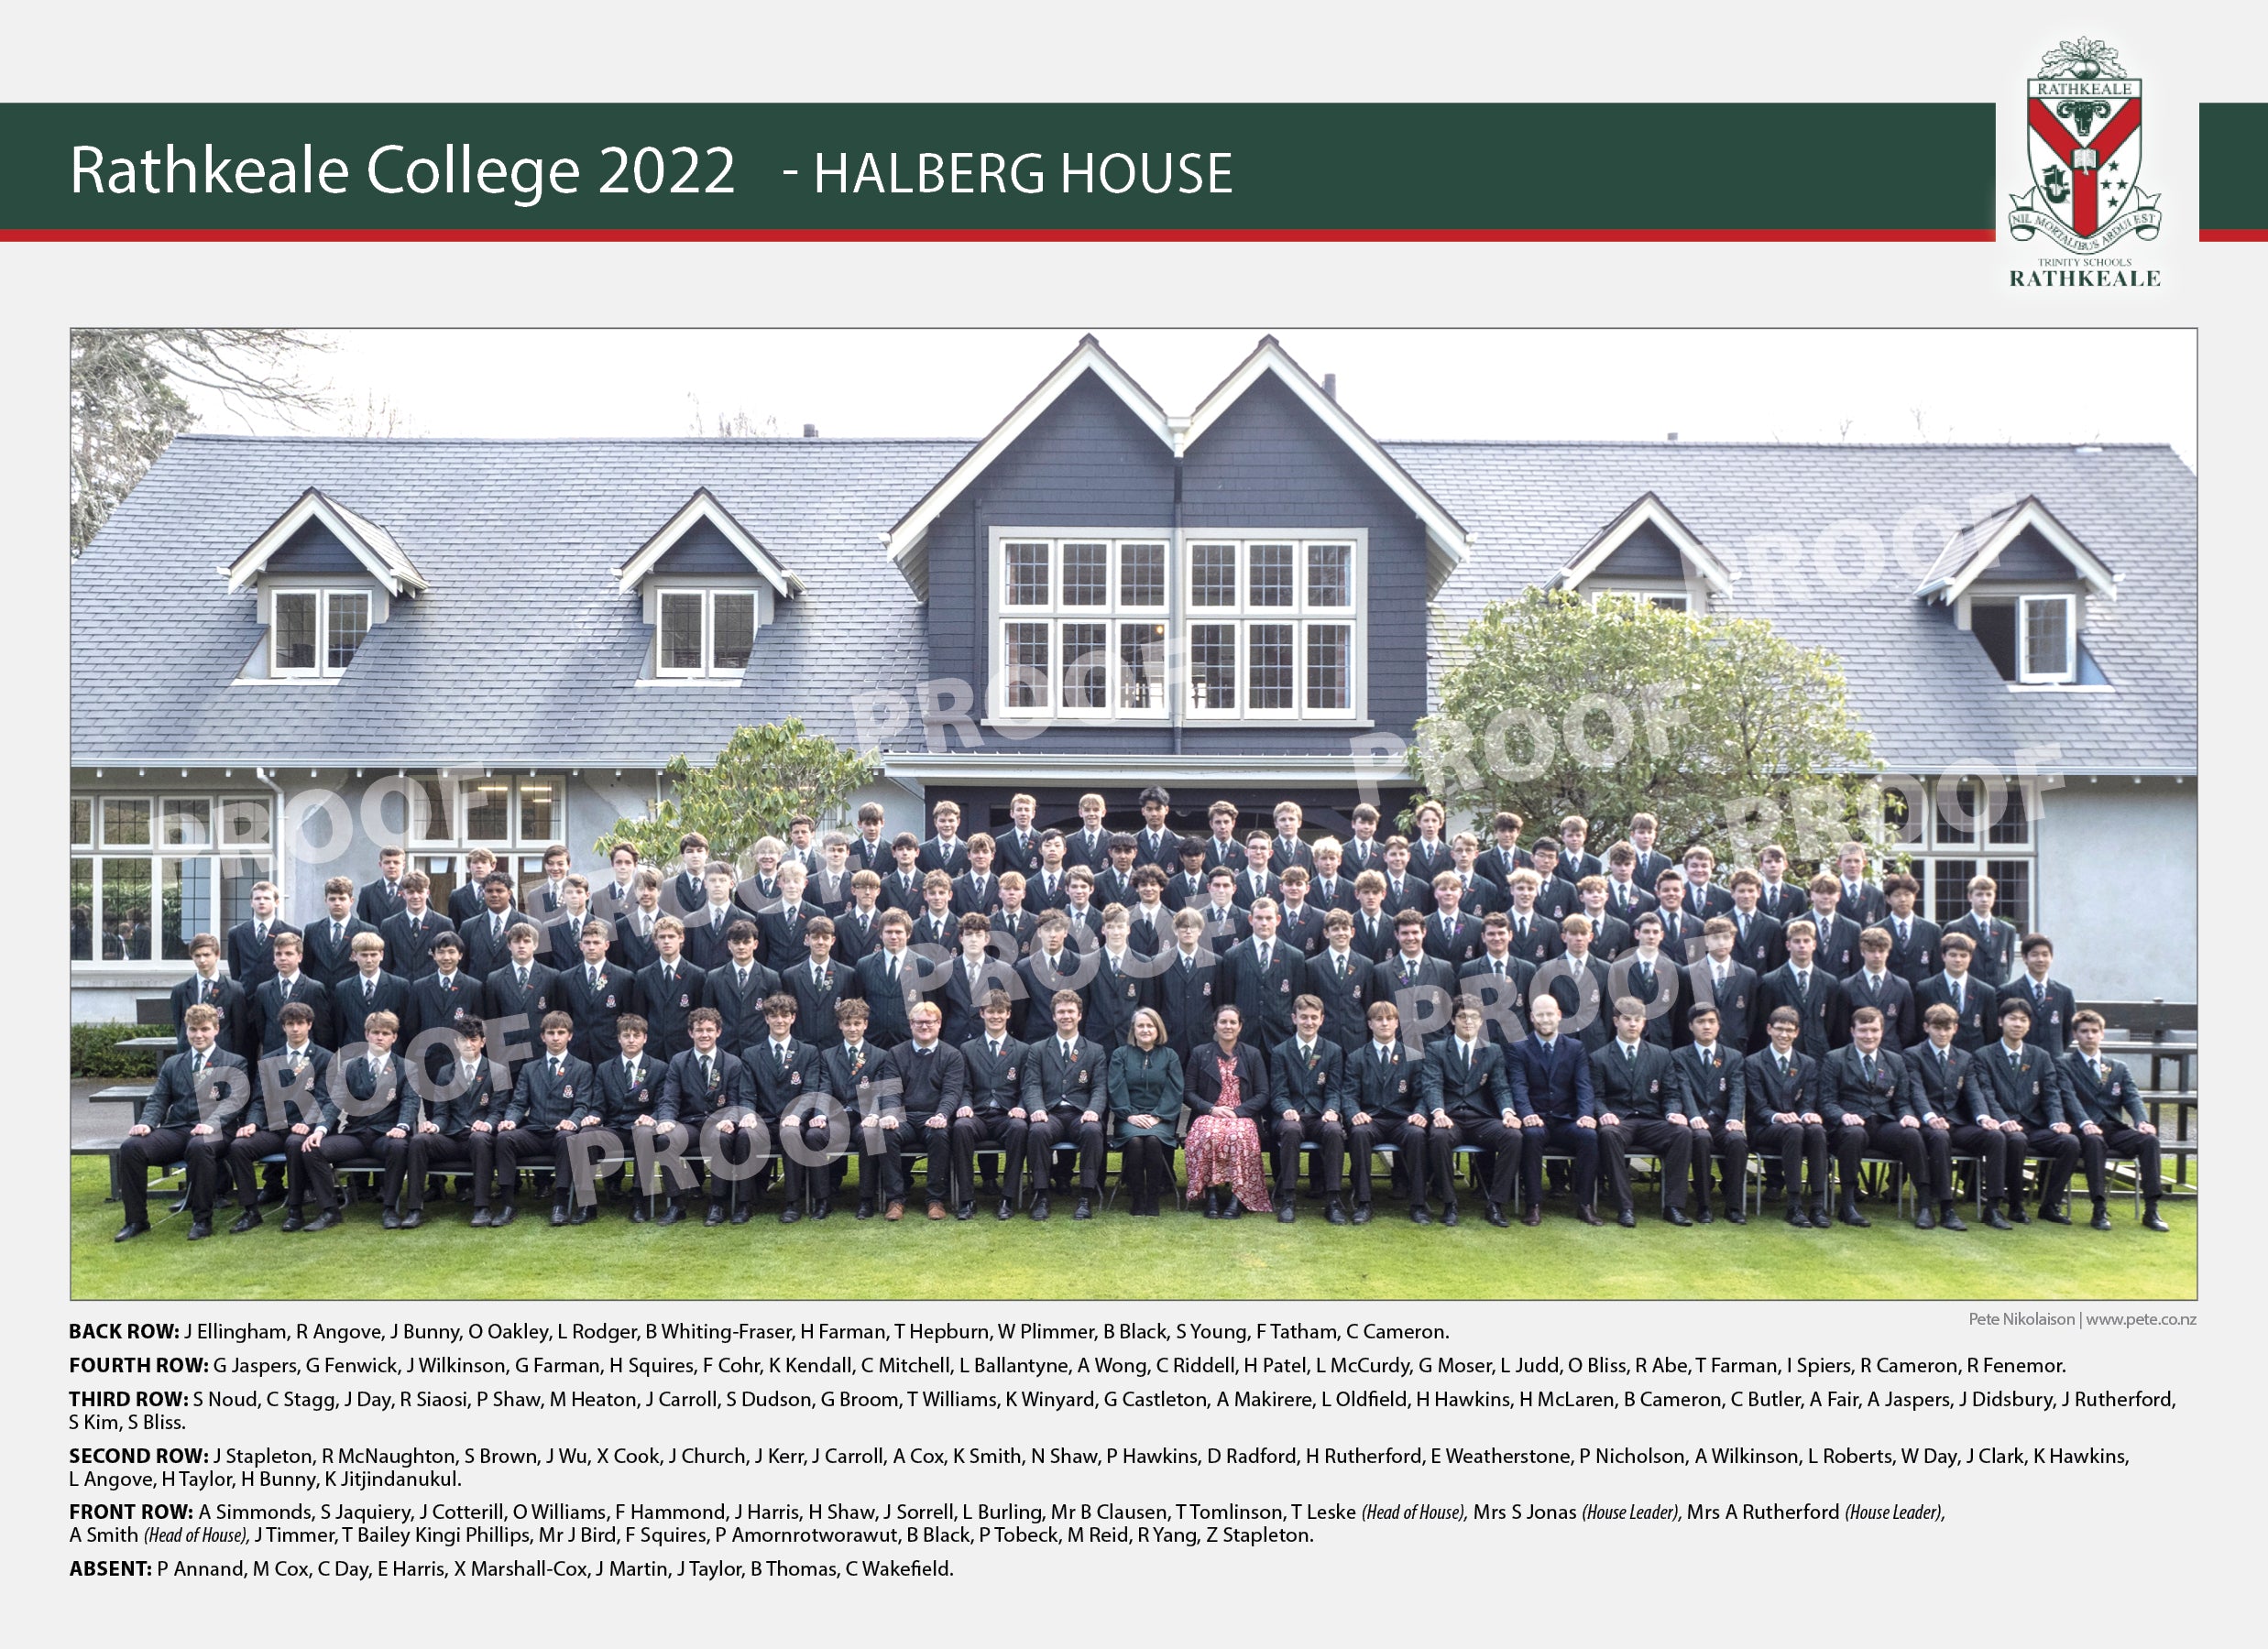 Halberg House - Rathkeale College 2022